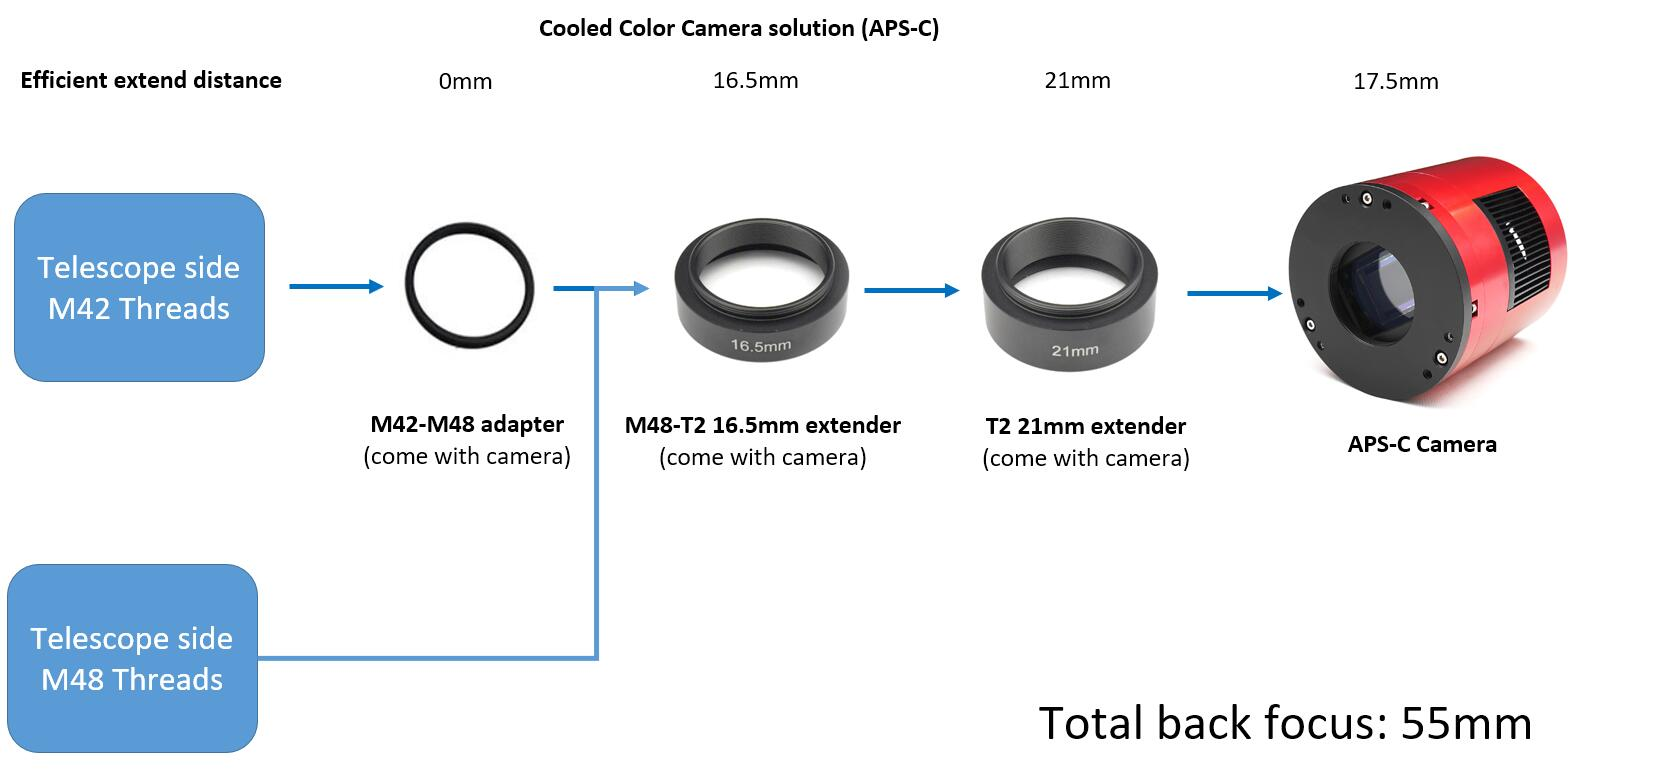 Cooled Color Camera solution(APS-C)